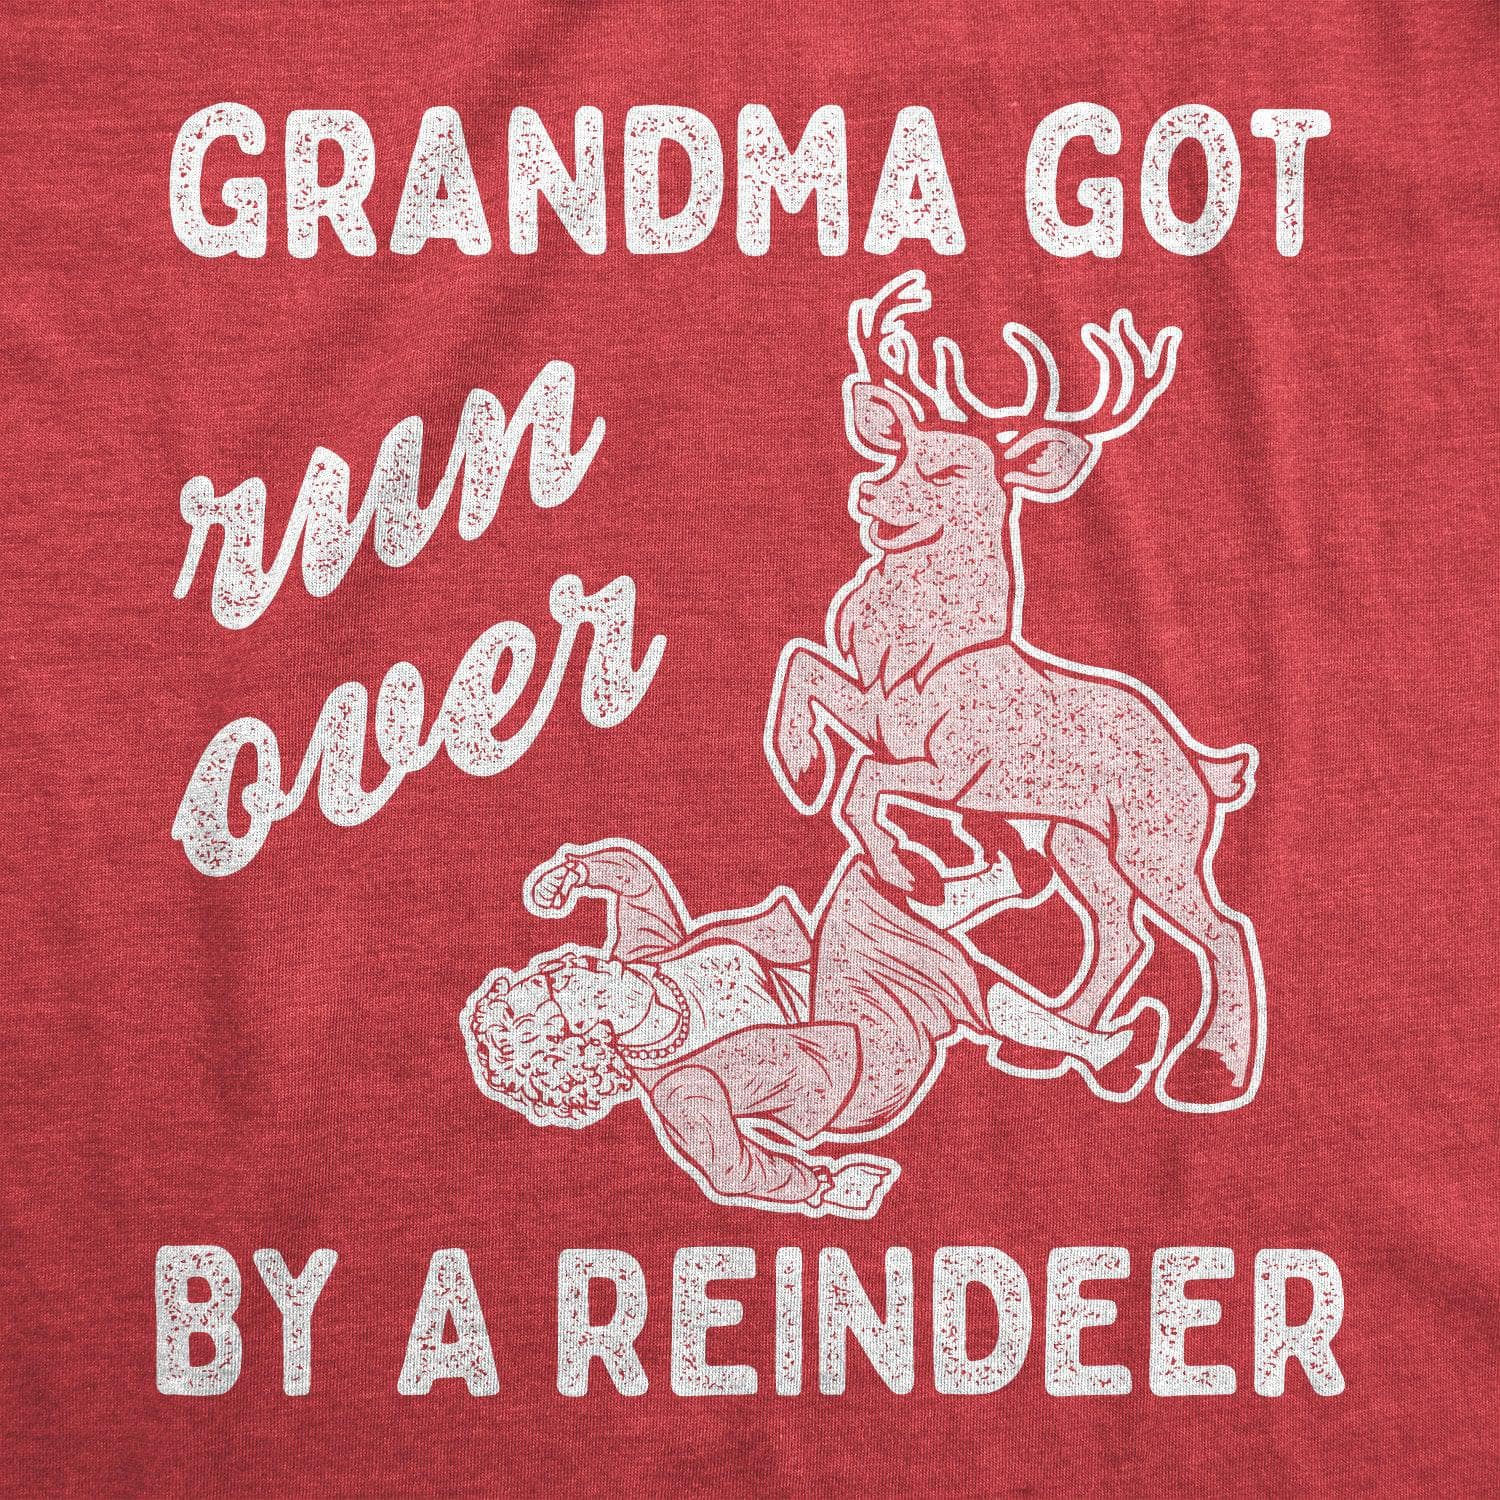 Grandma Got Run Over By A Reindeer Men's Tshirt  -  Crazy Dog T-Shirts